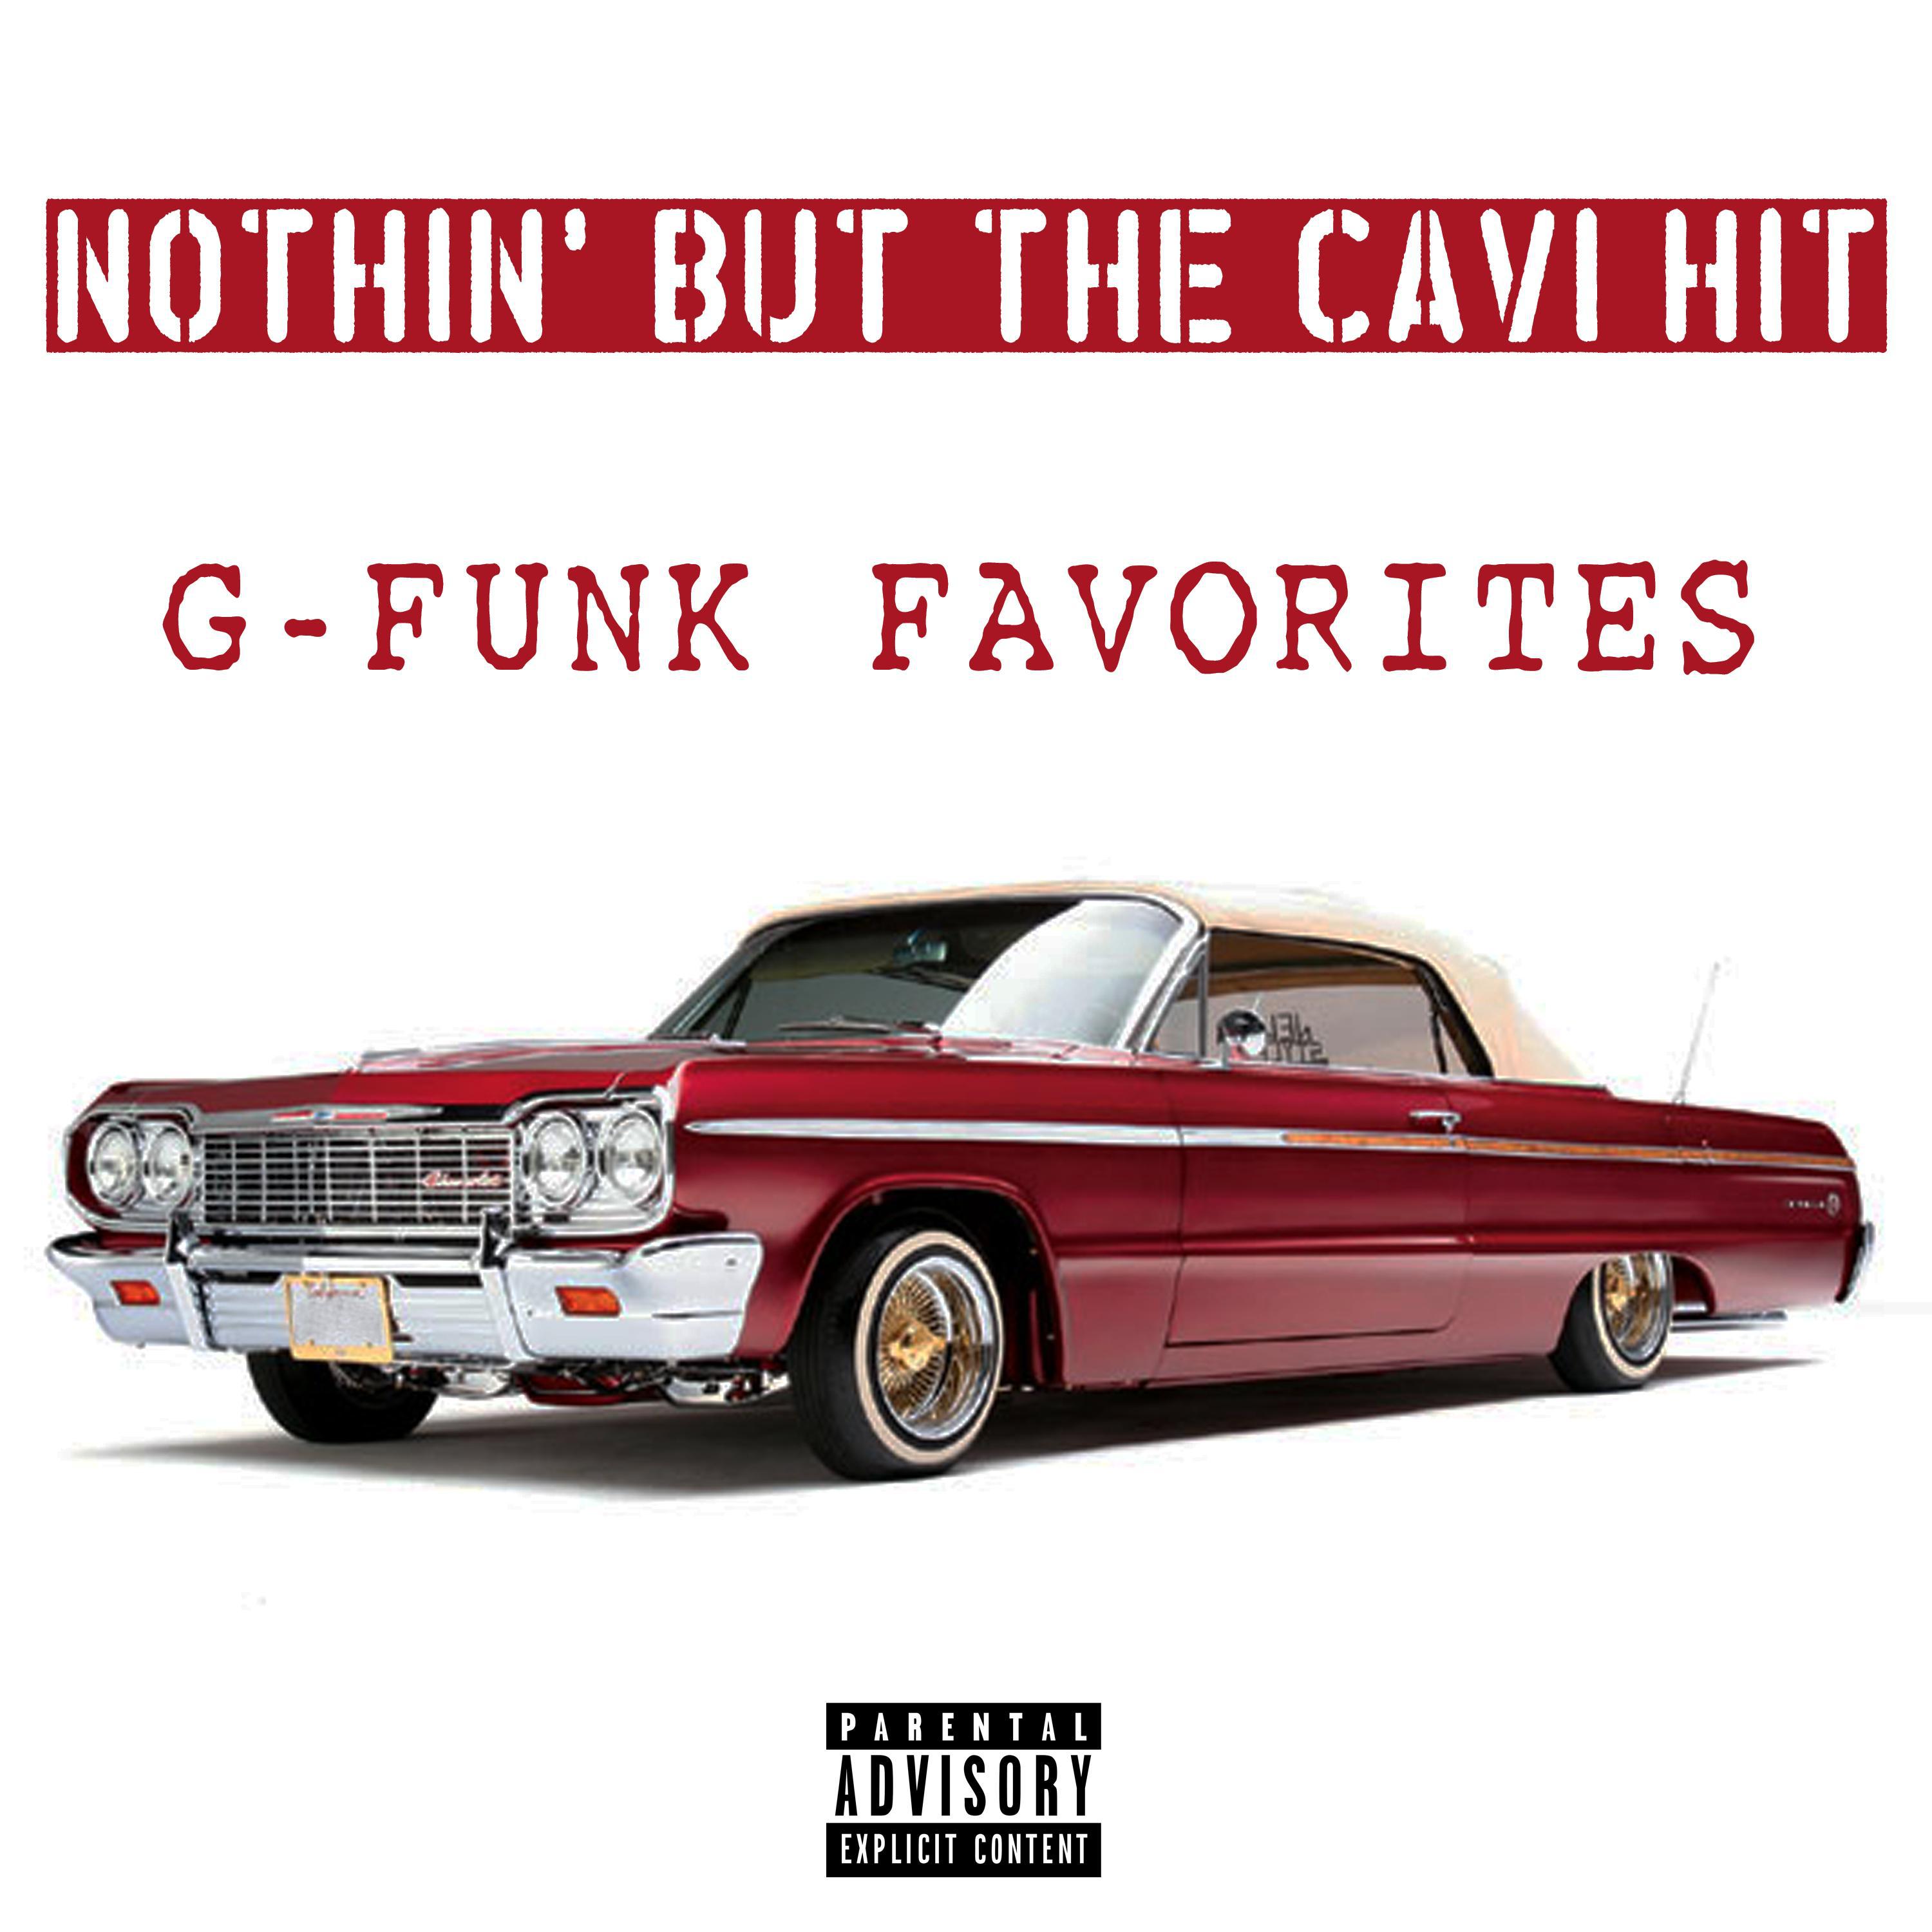 Nothin' but the Cavi Hit: G-Funk Favorites